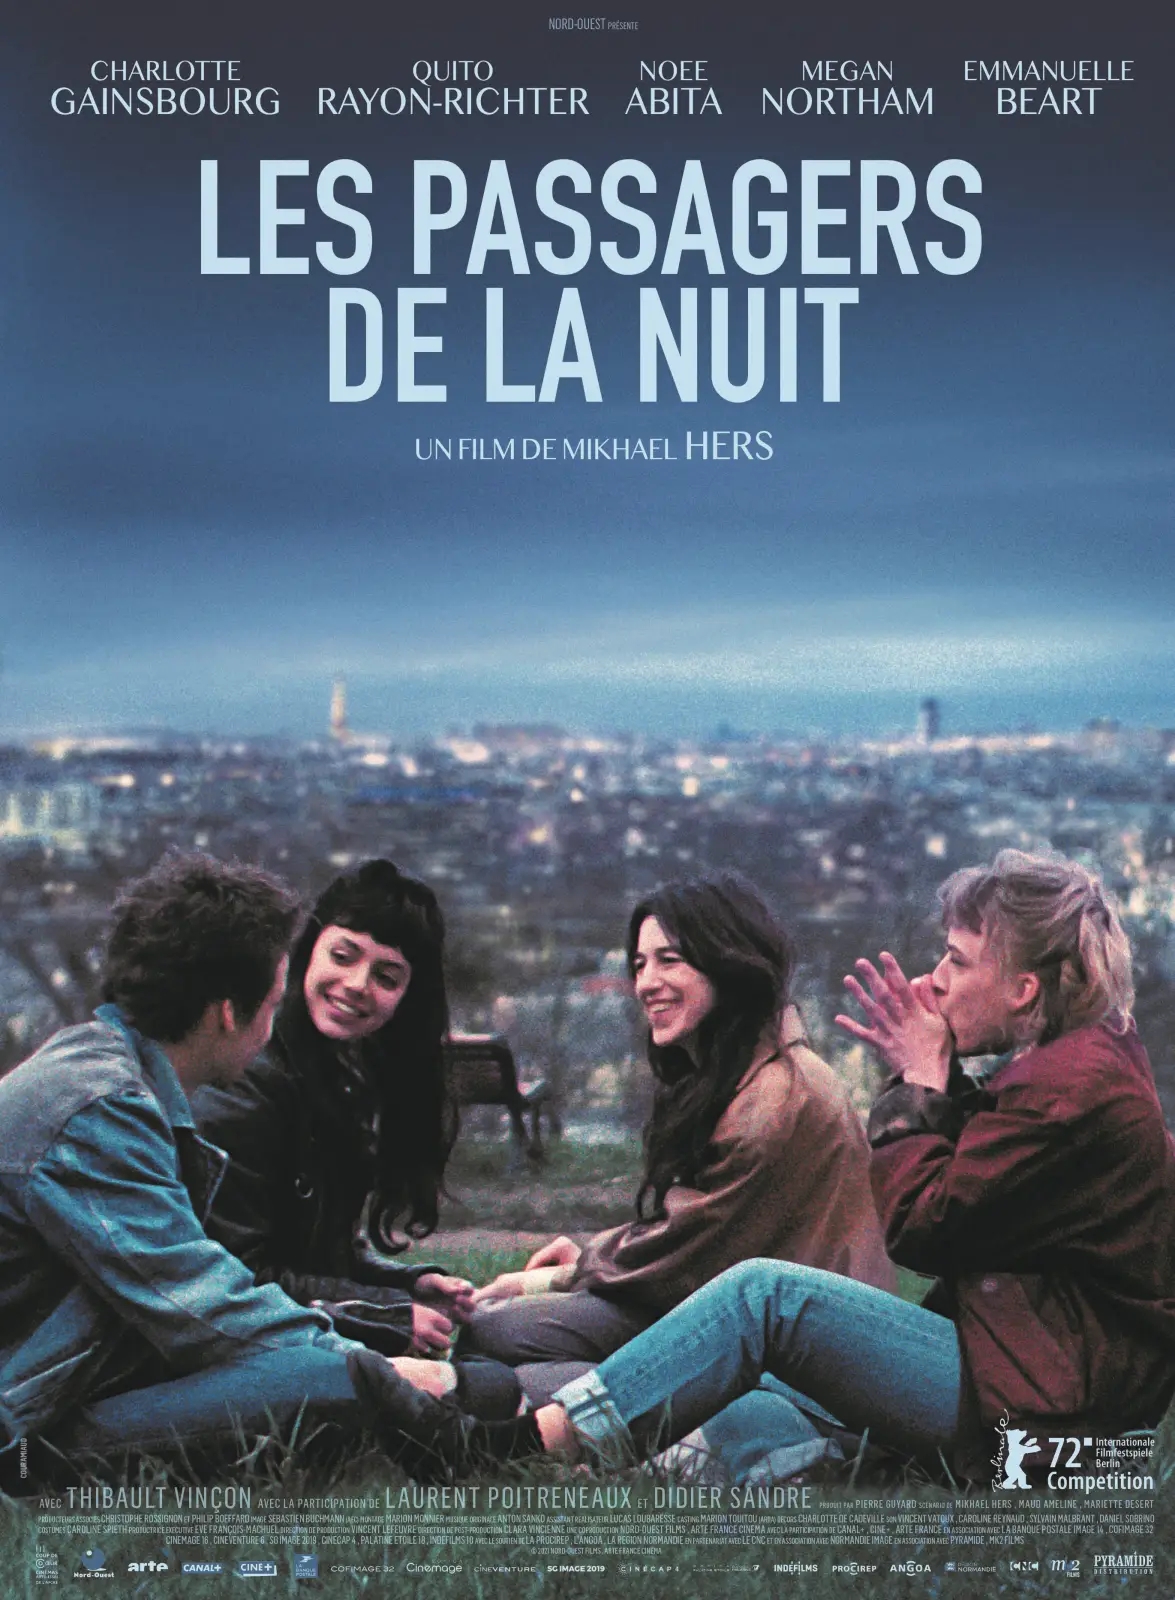 Les Passagers de la nuit,the pasengers of the night,就在今夜,巴黎夜旅人間,海報,poster